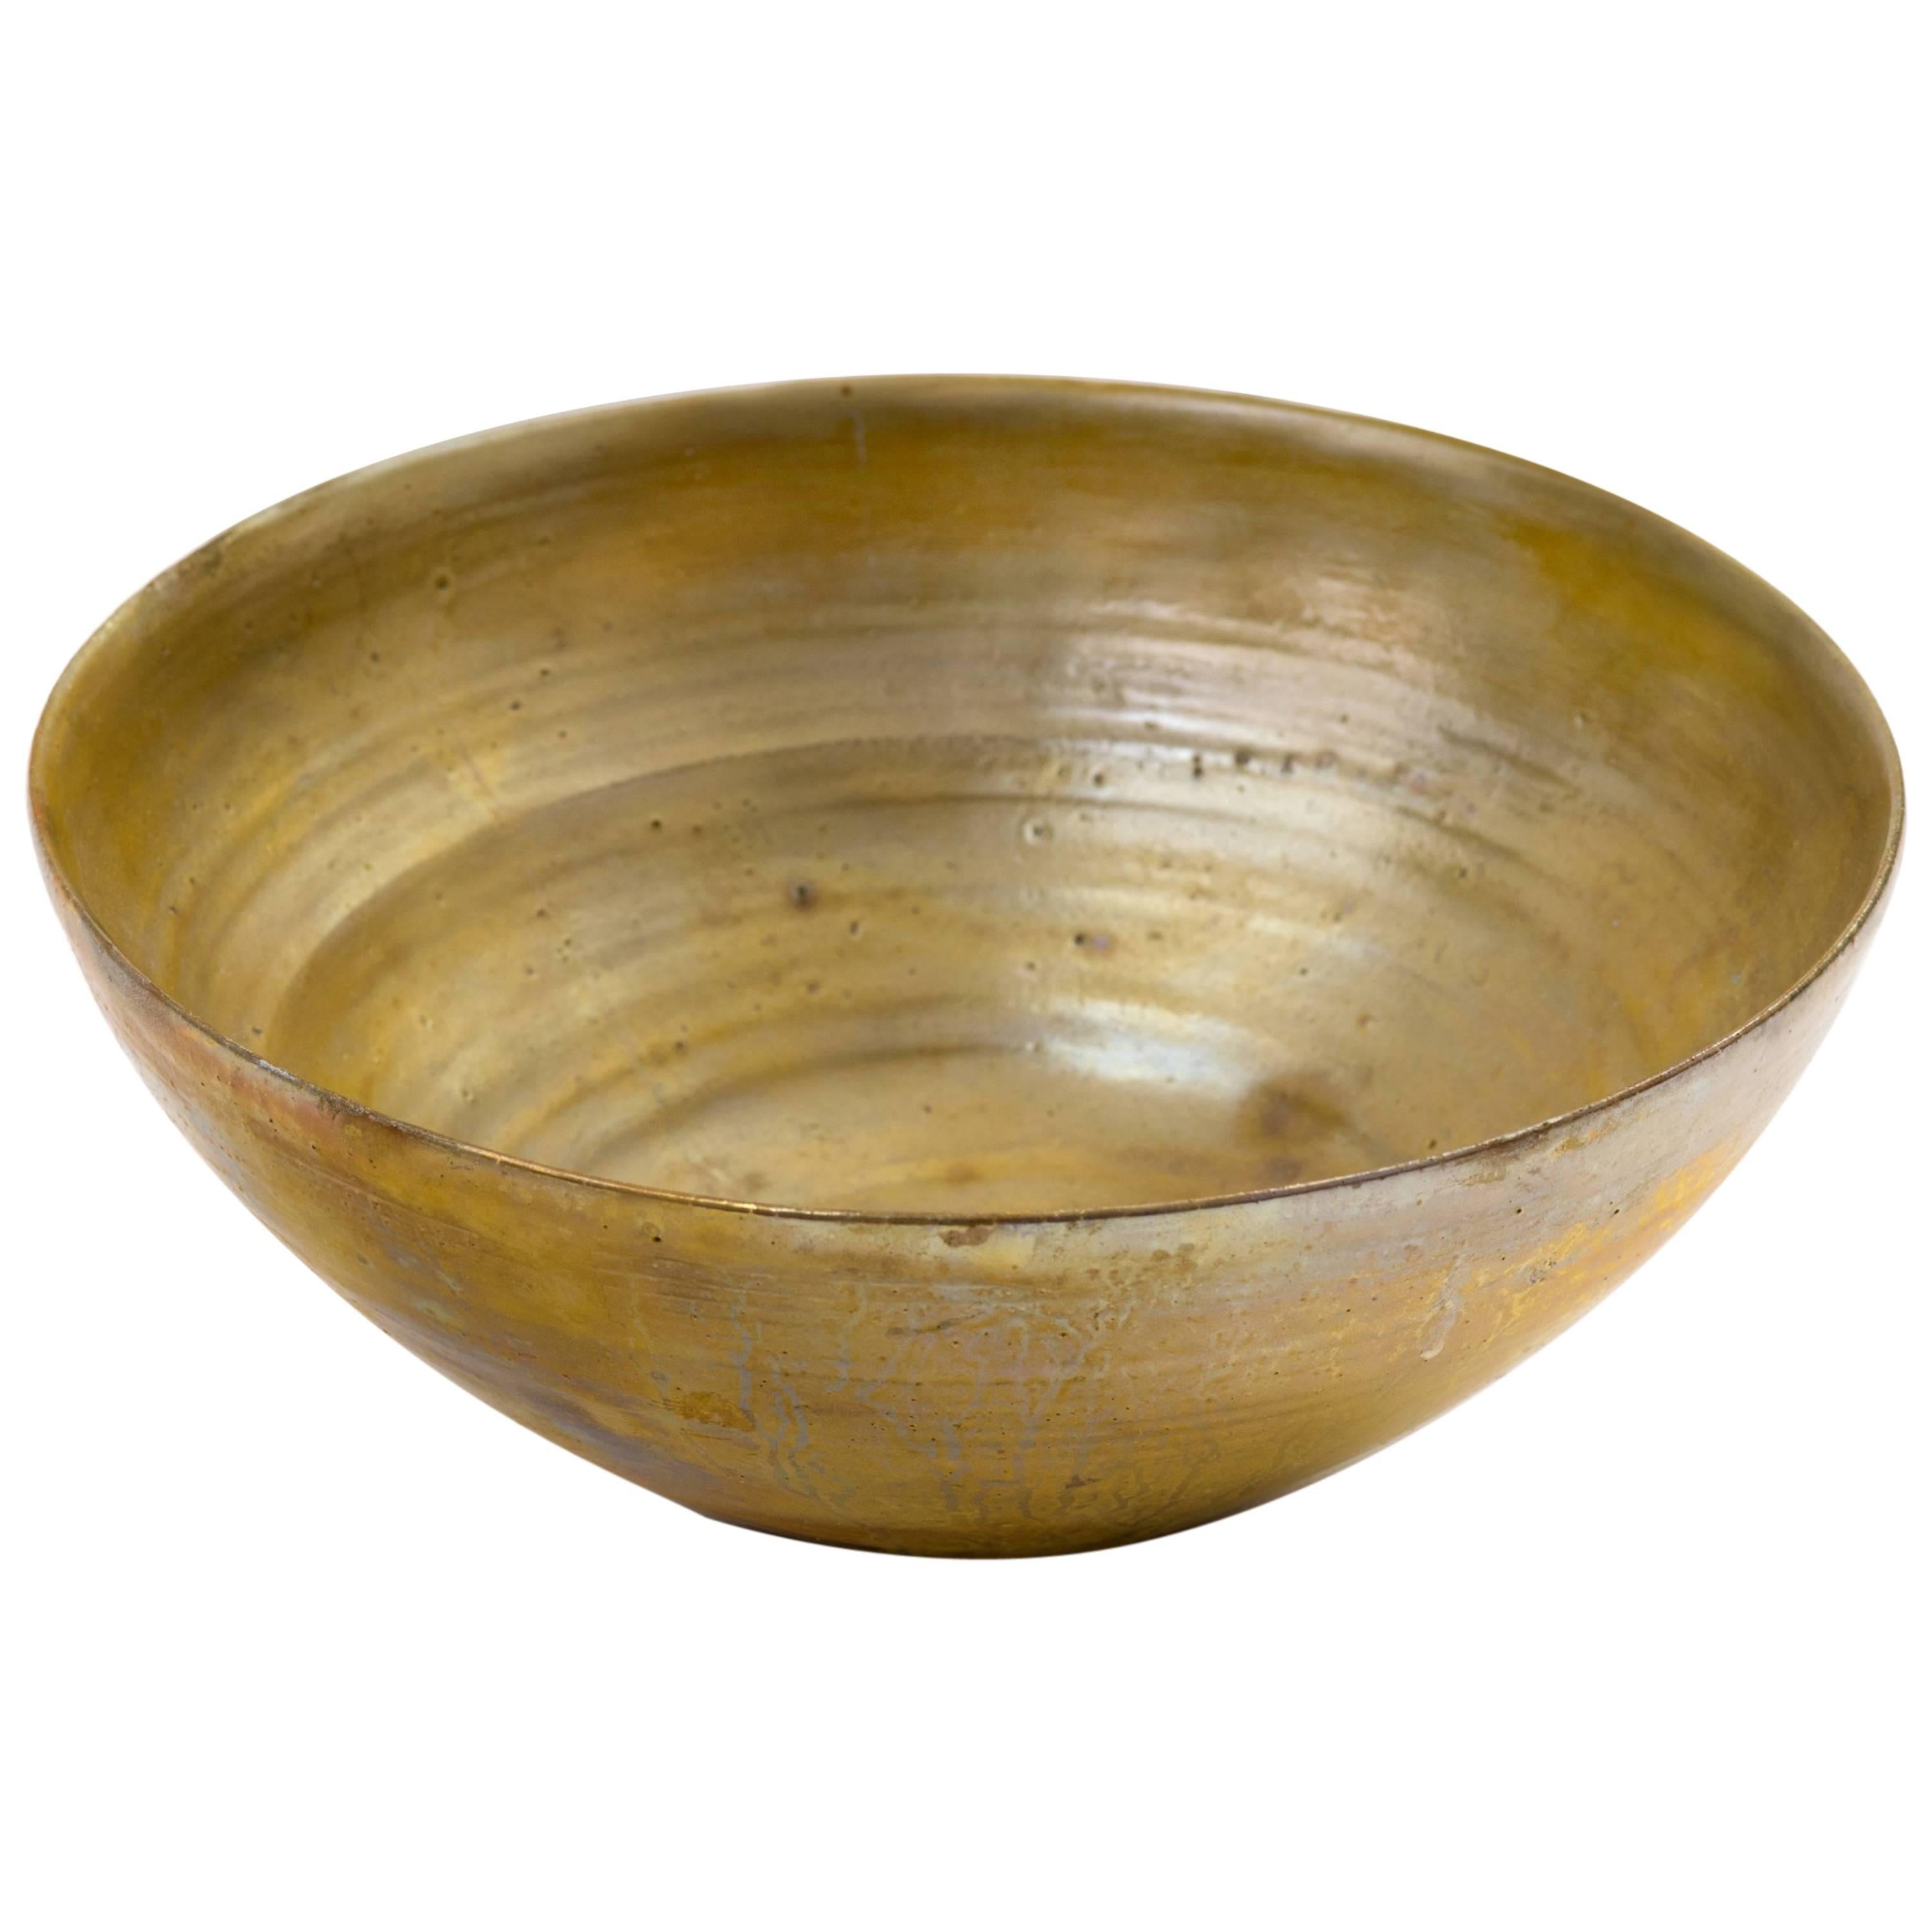 Beatrice Wood Golden Luster Glaze Hand Thrown Ceramic Bowl, 1960s